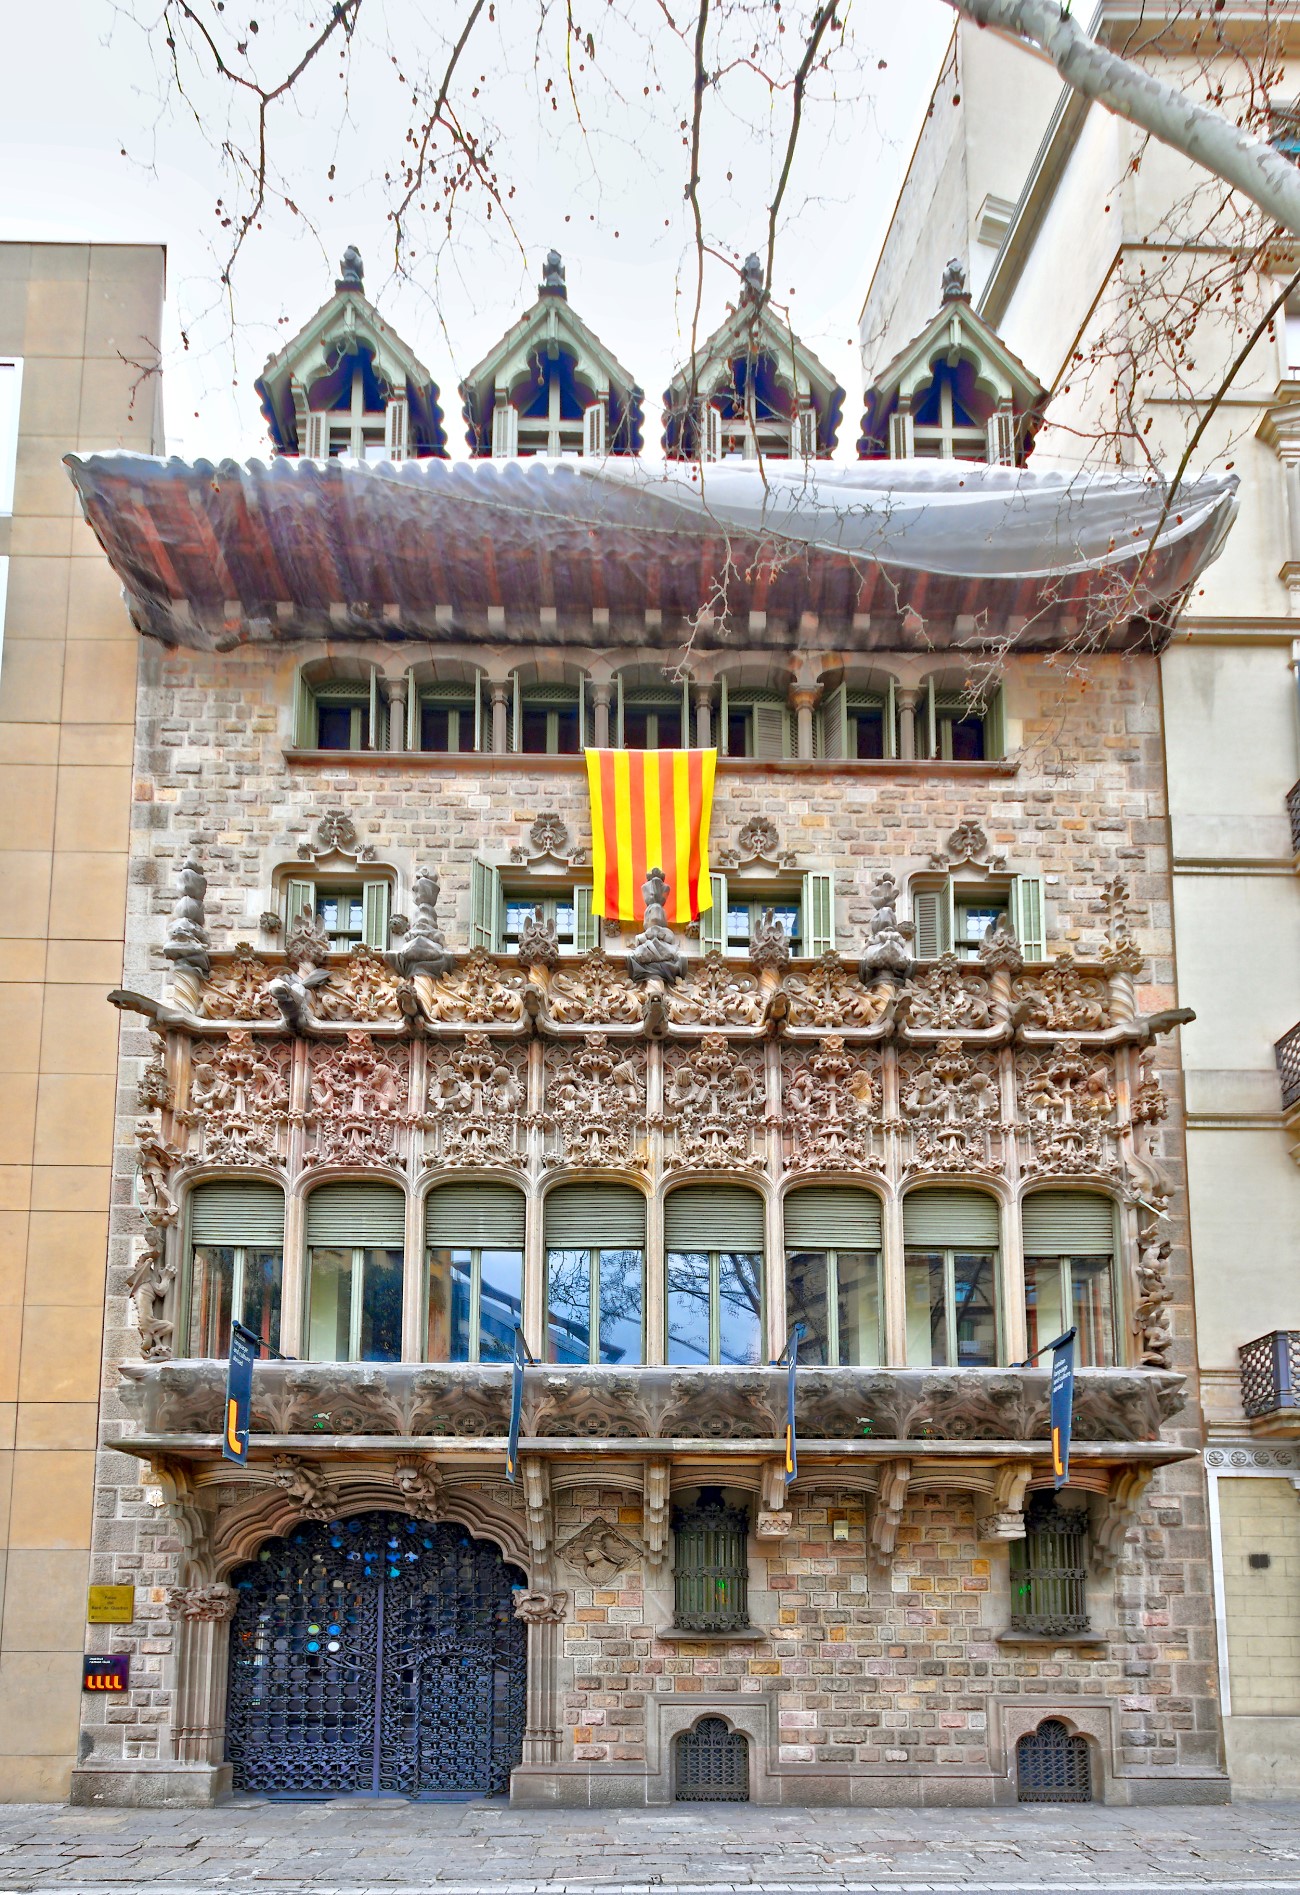 Palau del Baró de Quadras - the modernist building designed by Josep Puig i Cadafalch in Barcelona, Spain